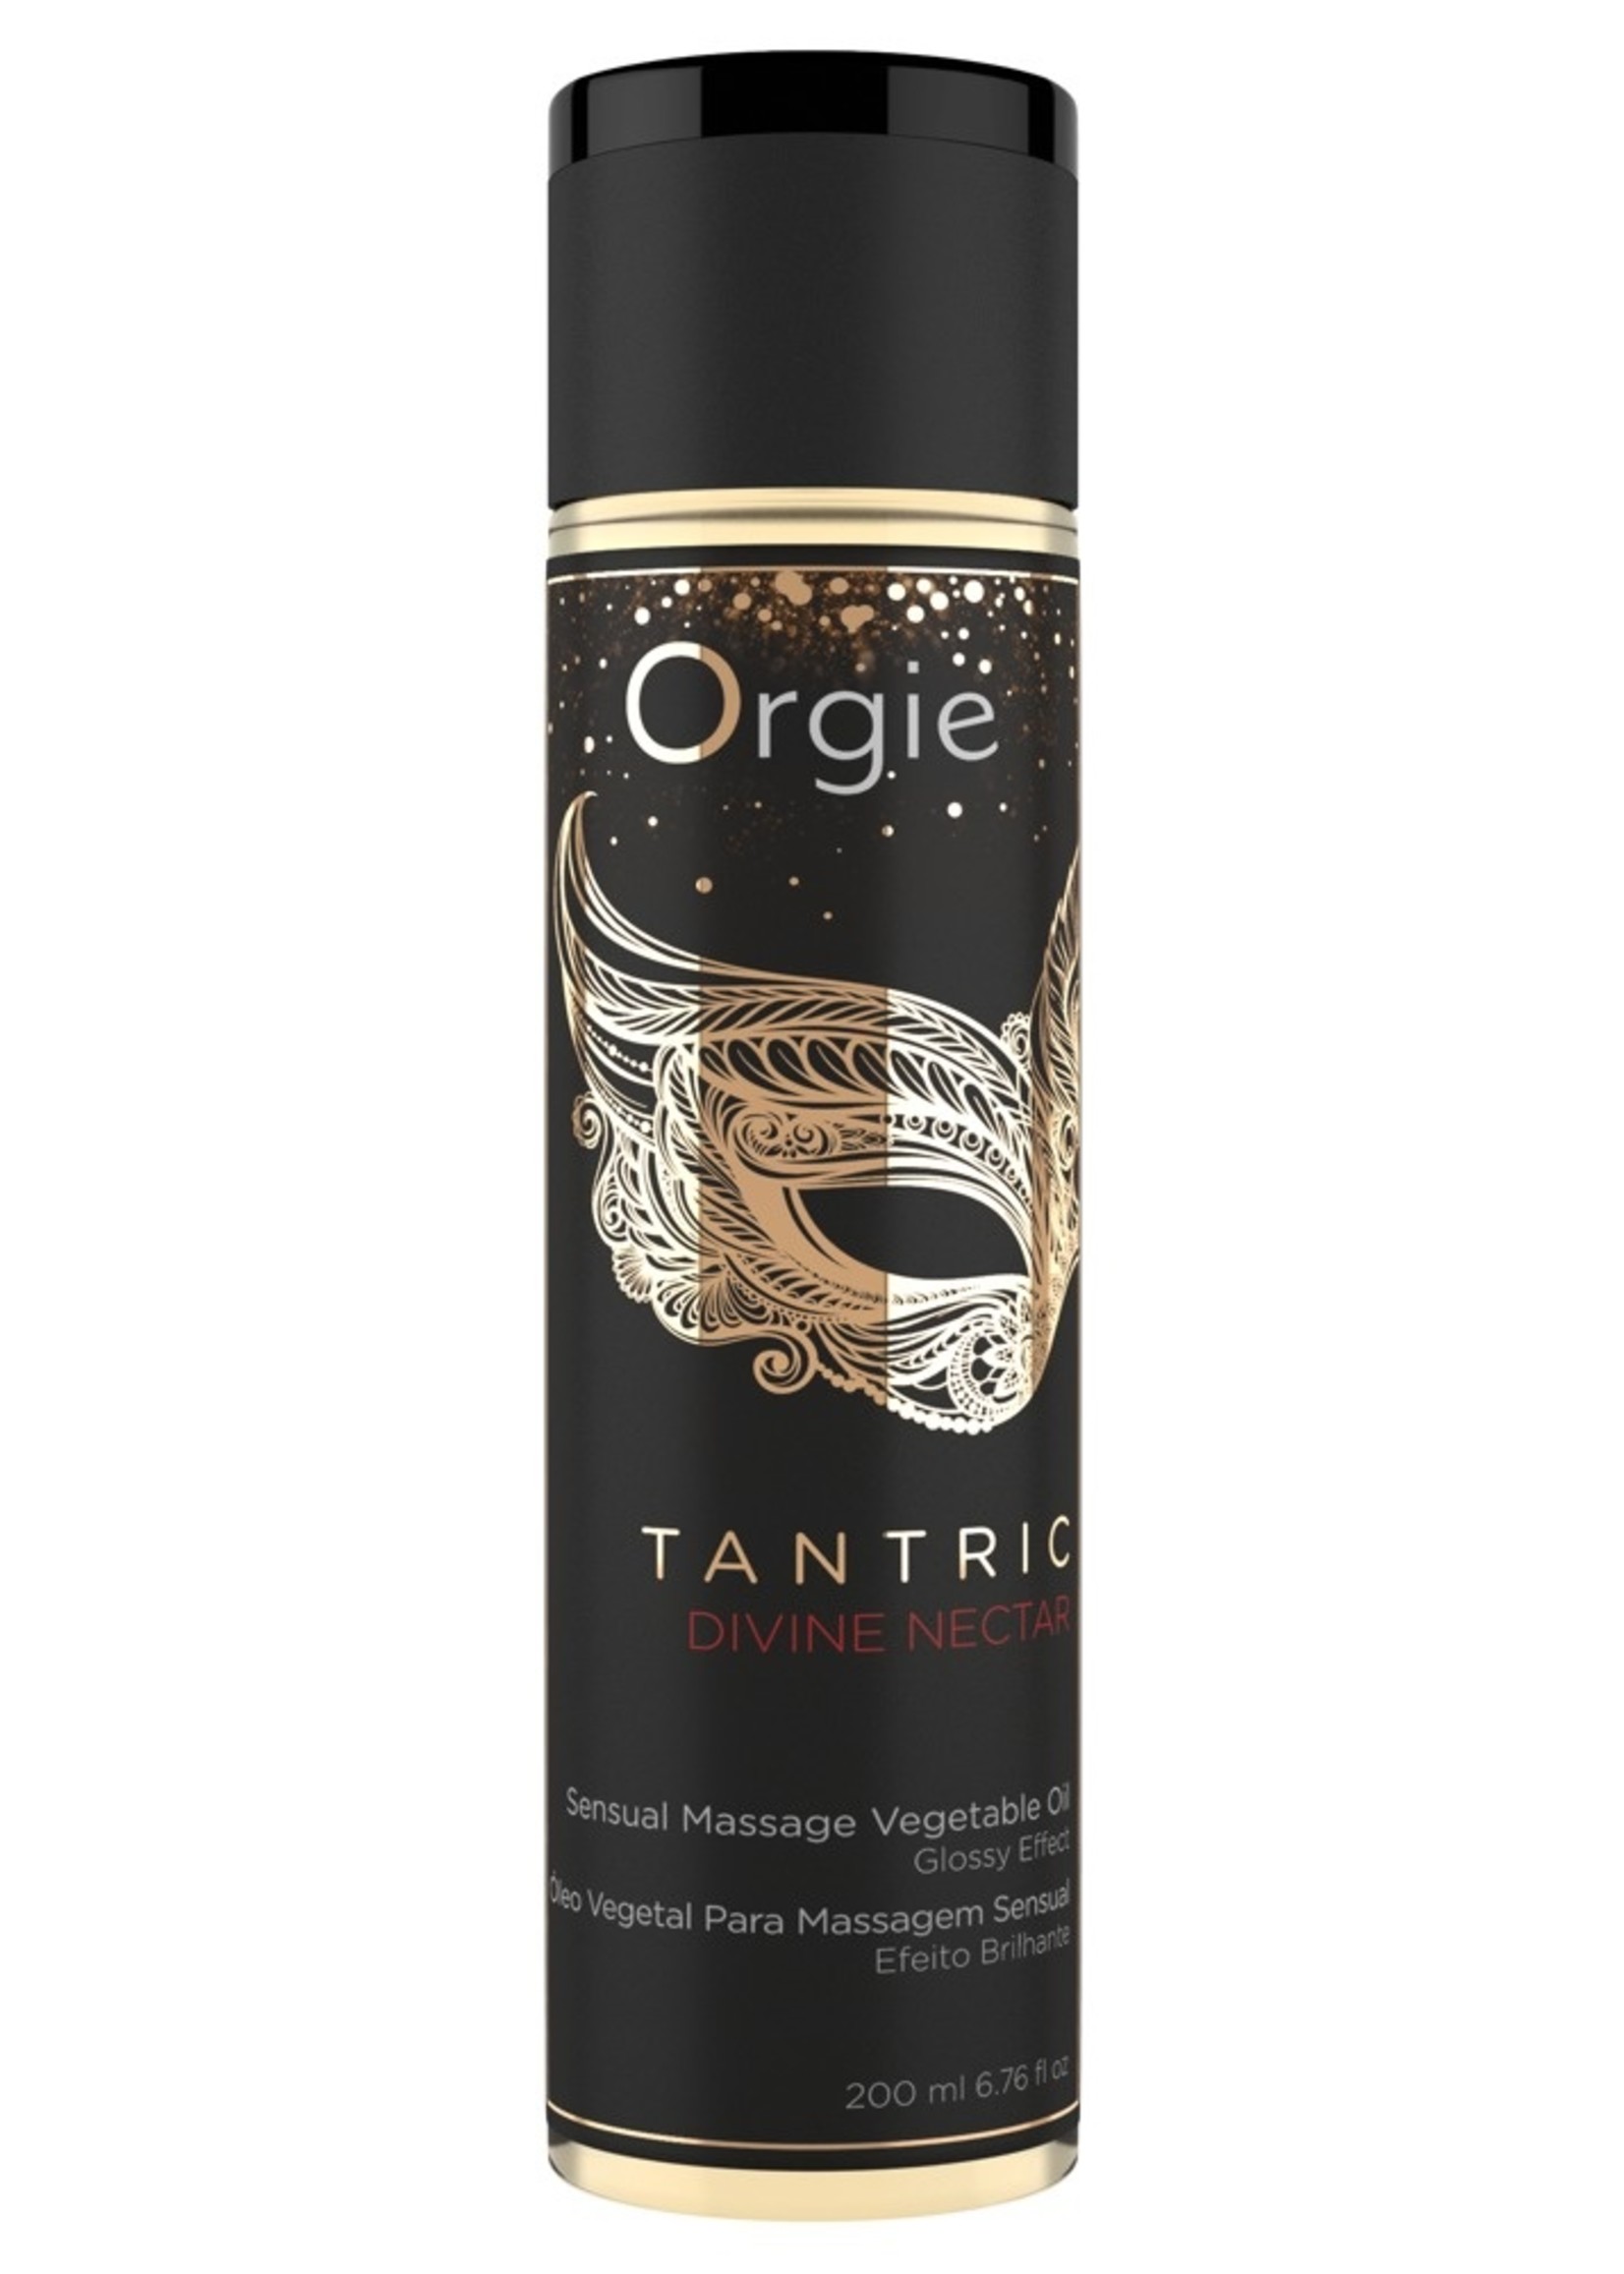 Tantric divine nectar - 200 ml